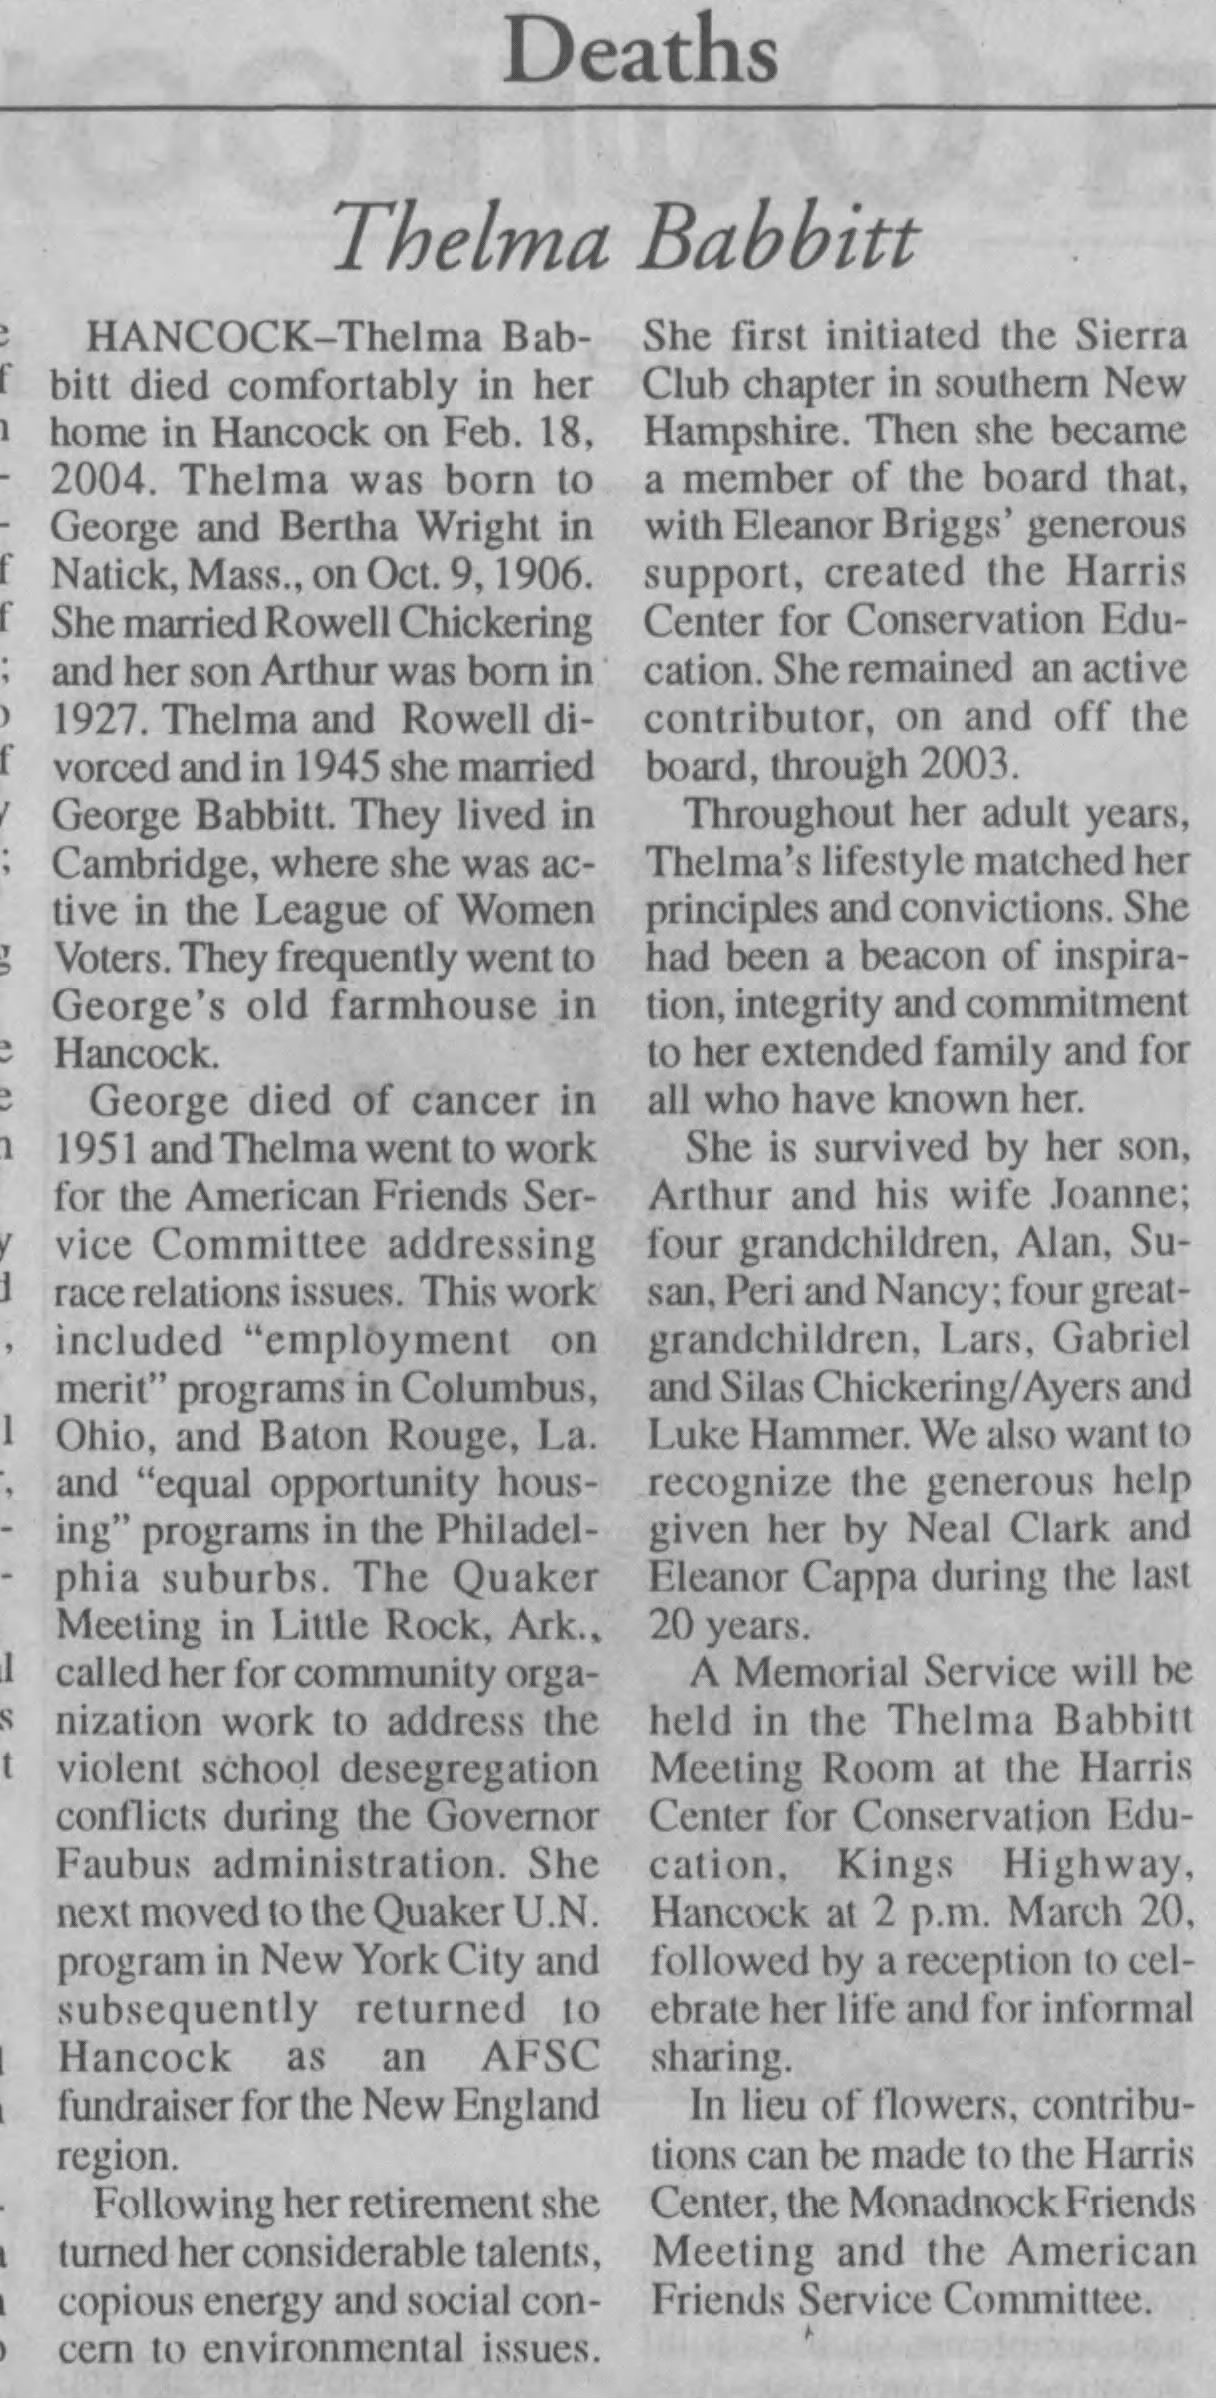 Obituary of Thema Babbitt 1906-2004, Peterborough Transcript 3-4-2004